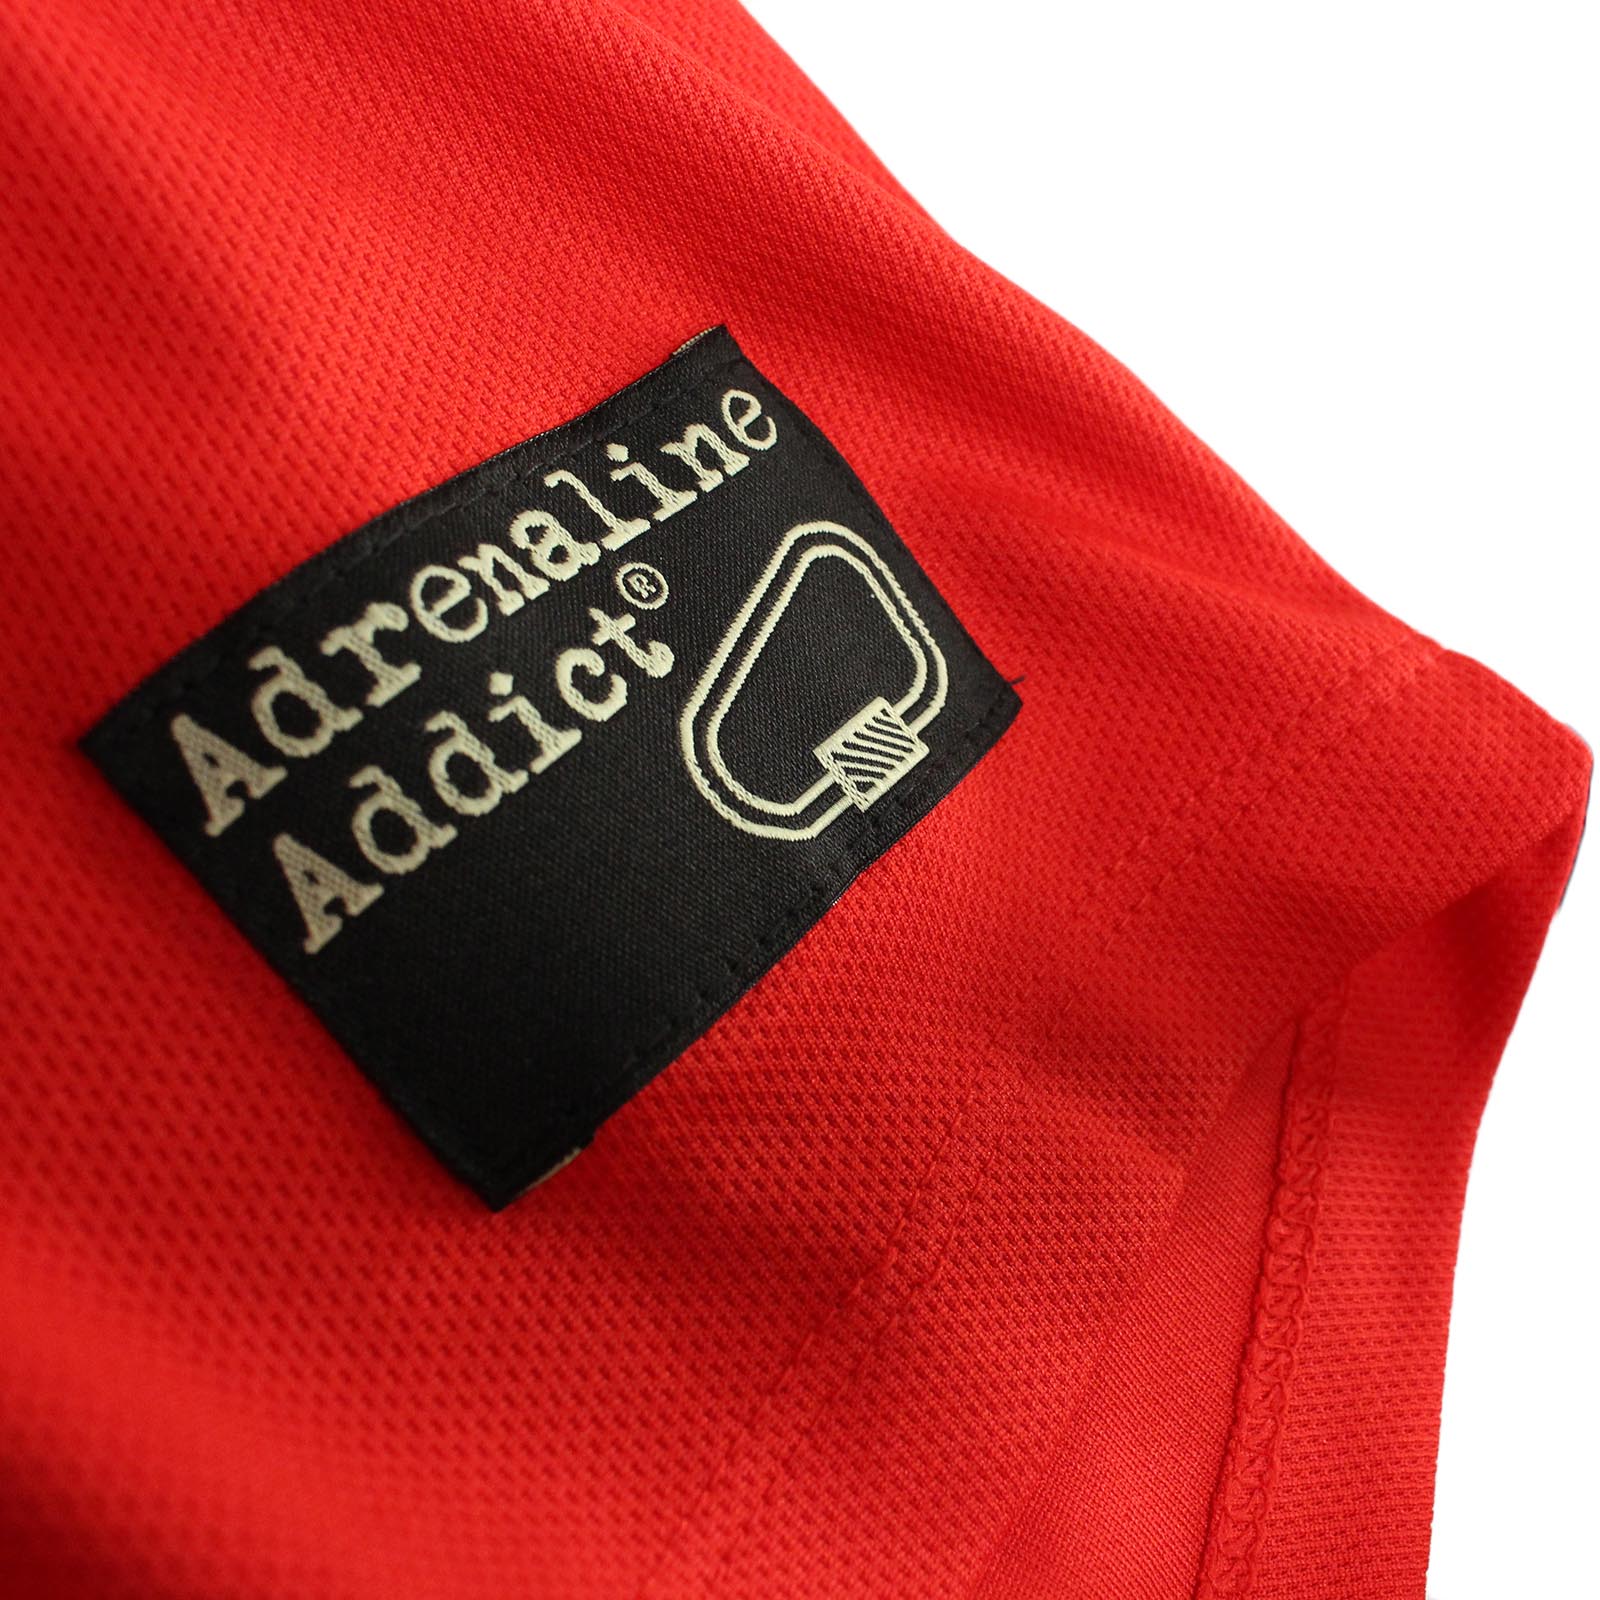 Adrenaline Addict-desafiar la gravedad-Dry Fit Transpirable Deportes Cuello Redondo Camiseta